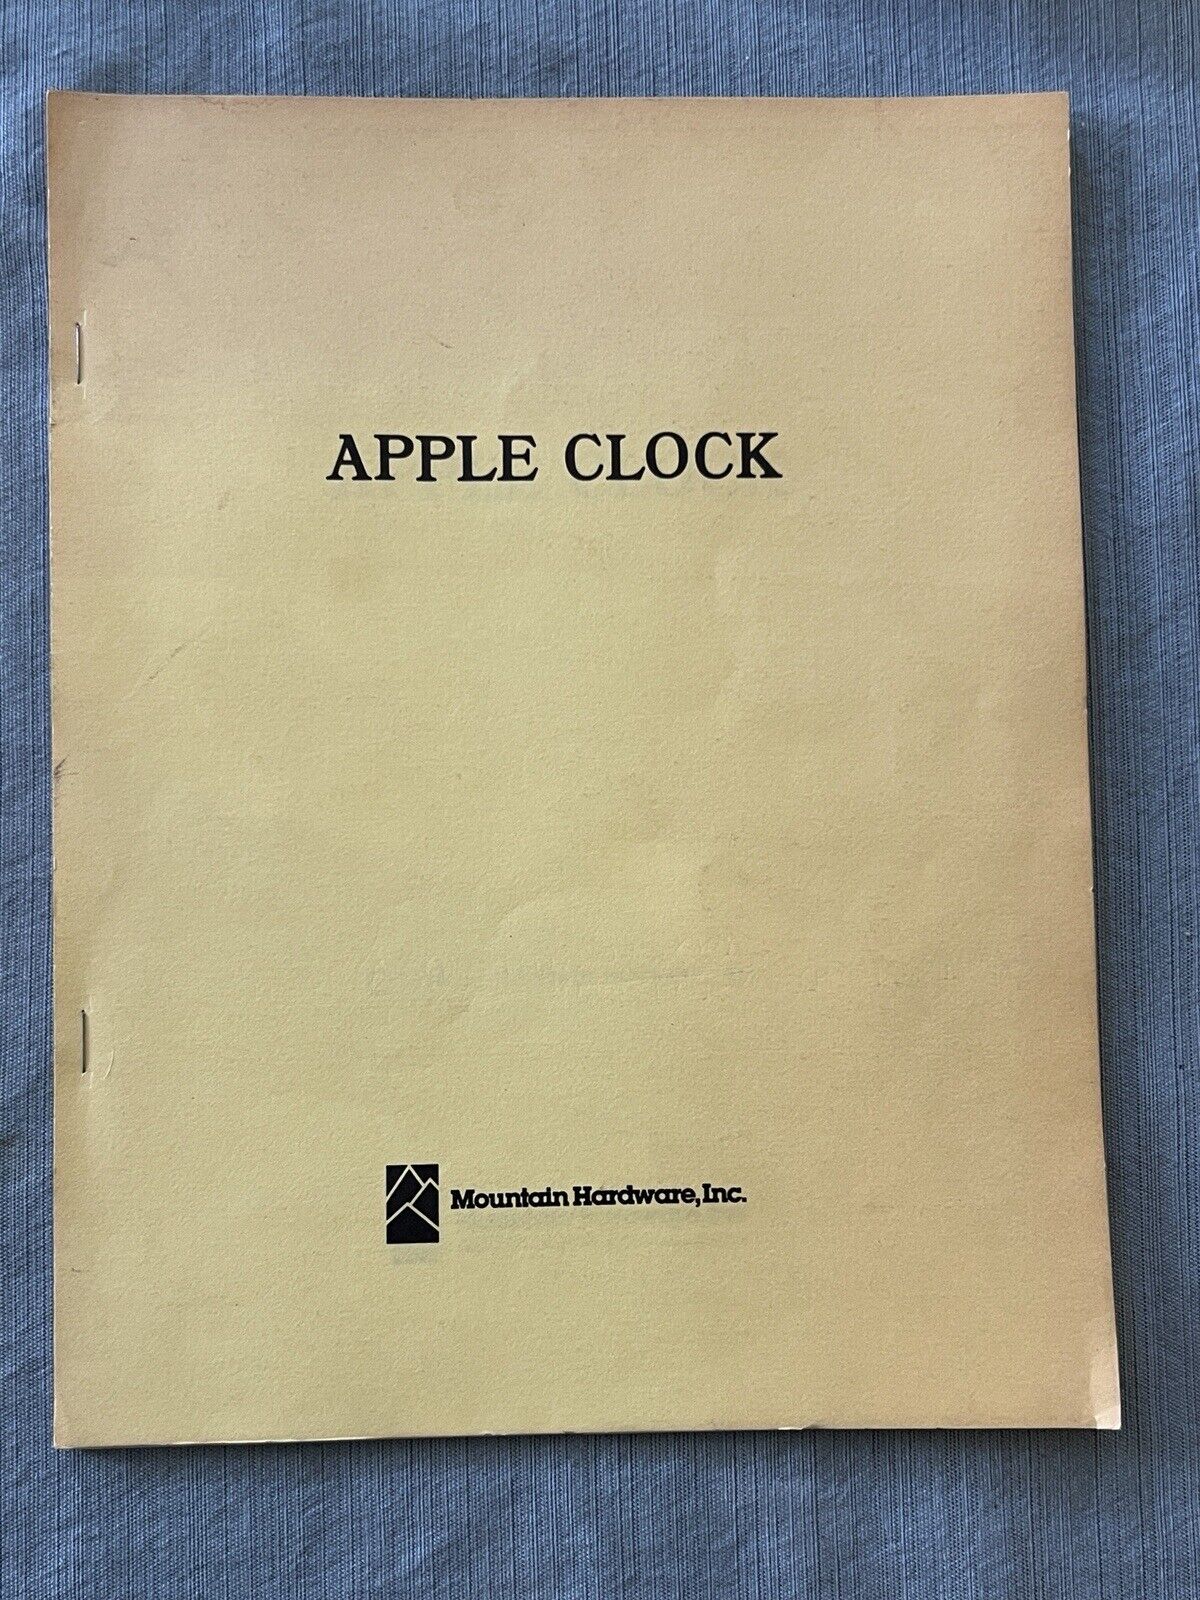 RARE Apple Clock Manual 1978 Mountain Hardware Inc Mint Condition Free Fast Ship